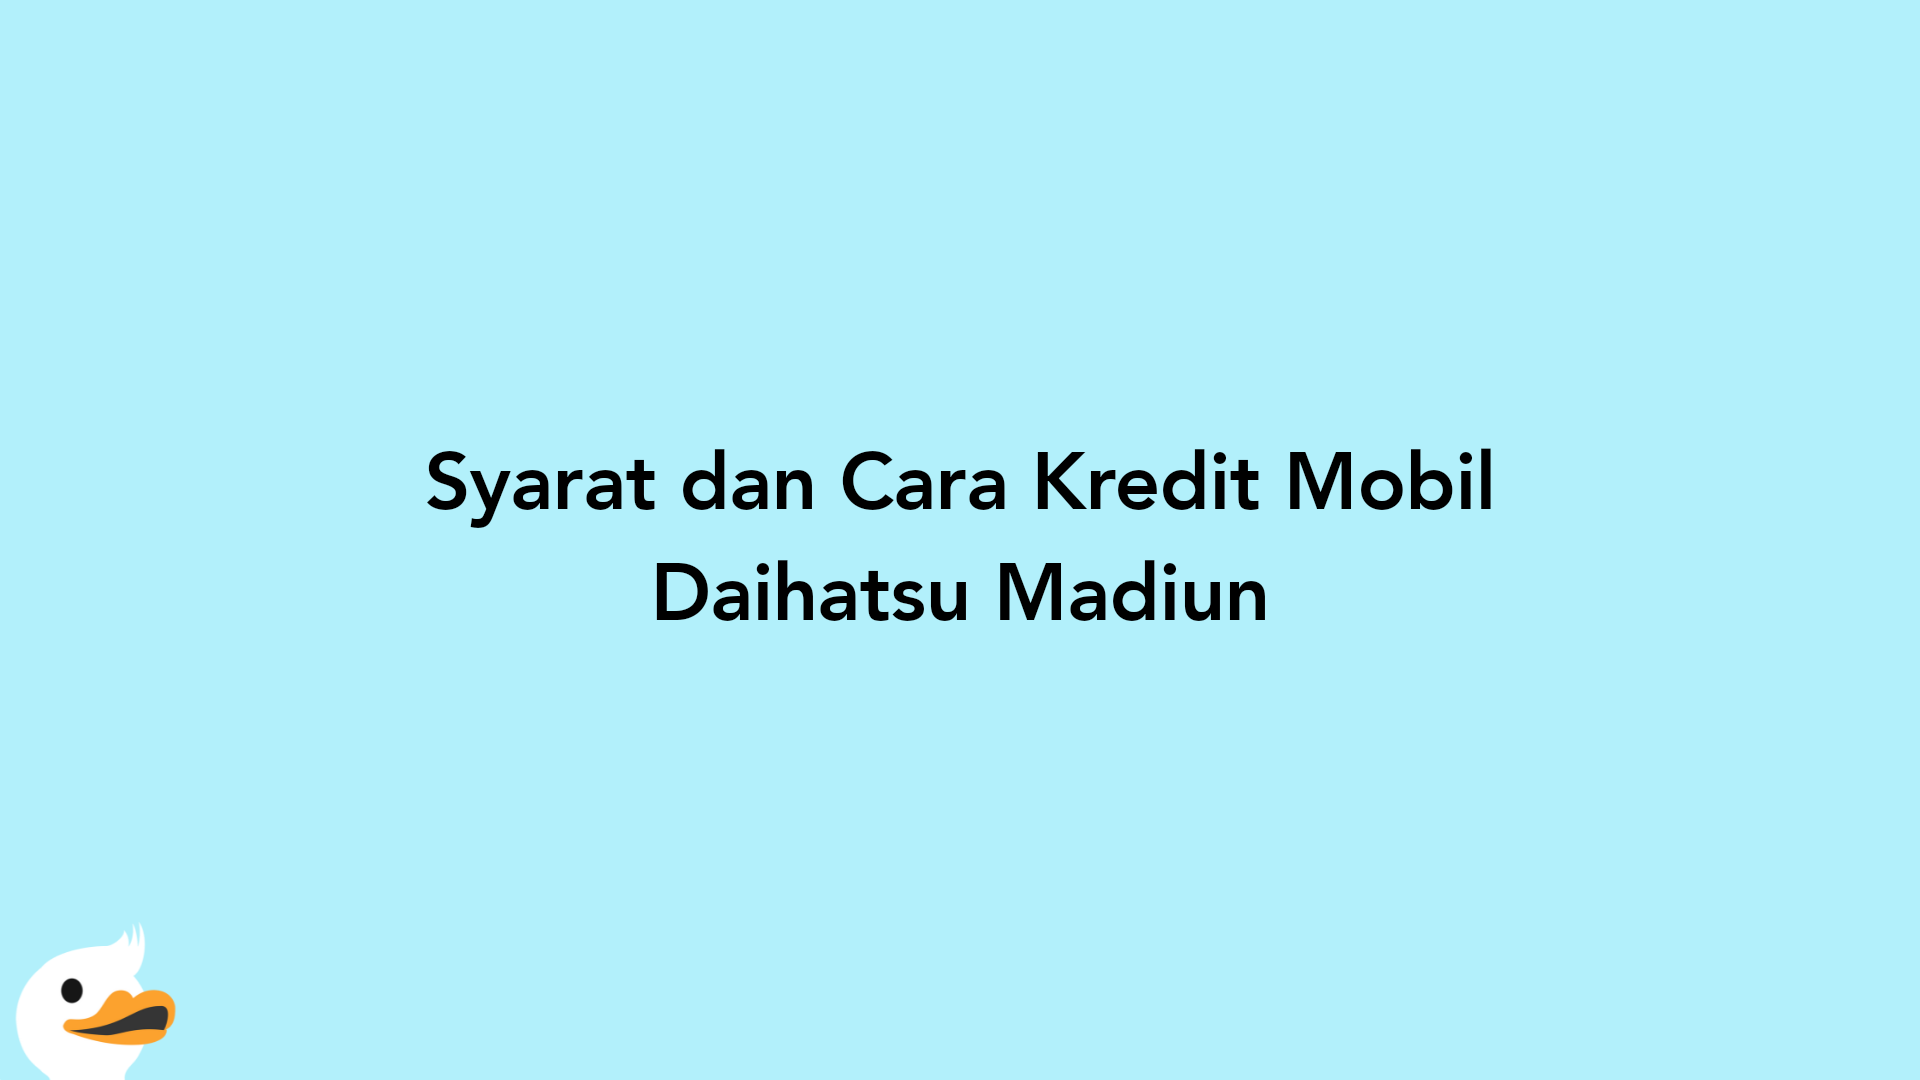 Syarat dan Cara Kredit Mobil Daihatsu Madiun